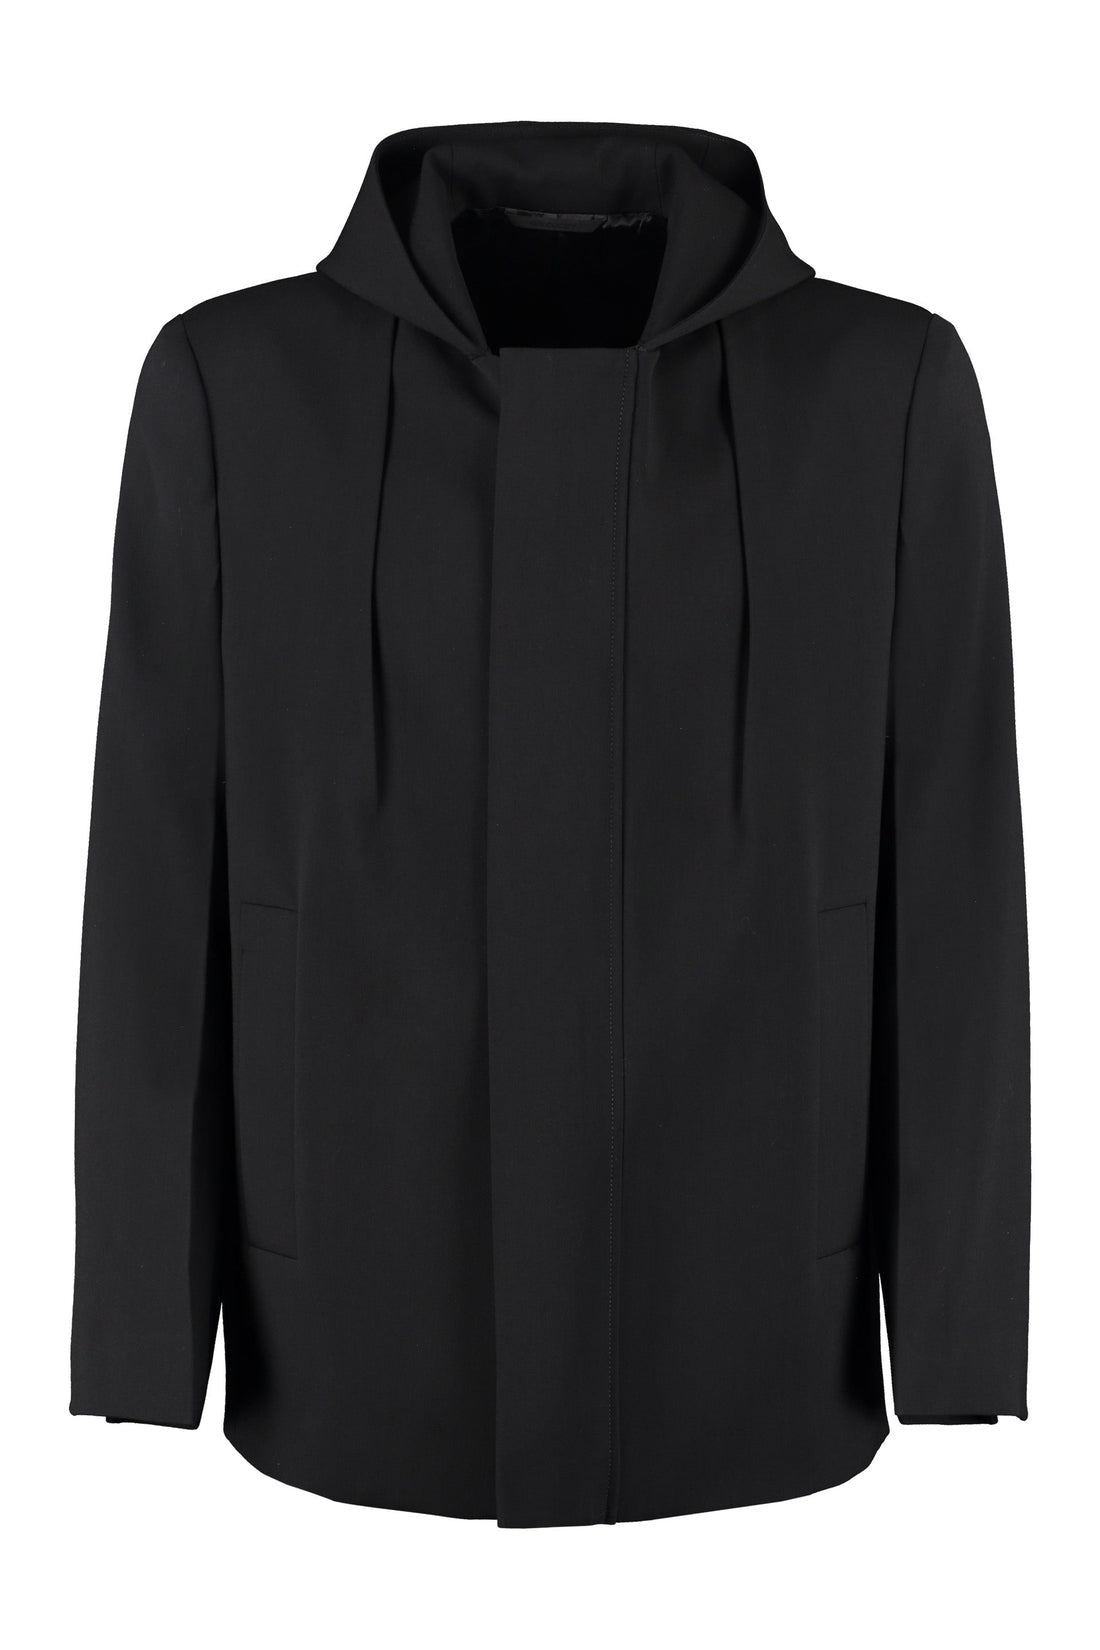 Givenchy-OUTLET-SALE-Virgin wool jacket-ARCHIVIST